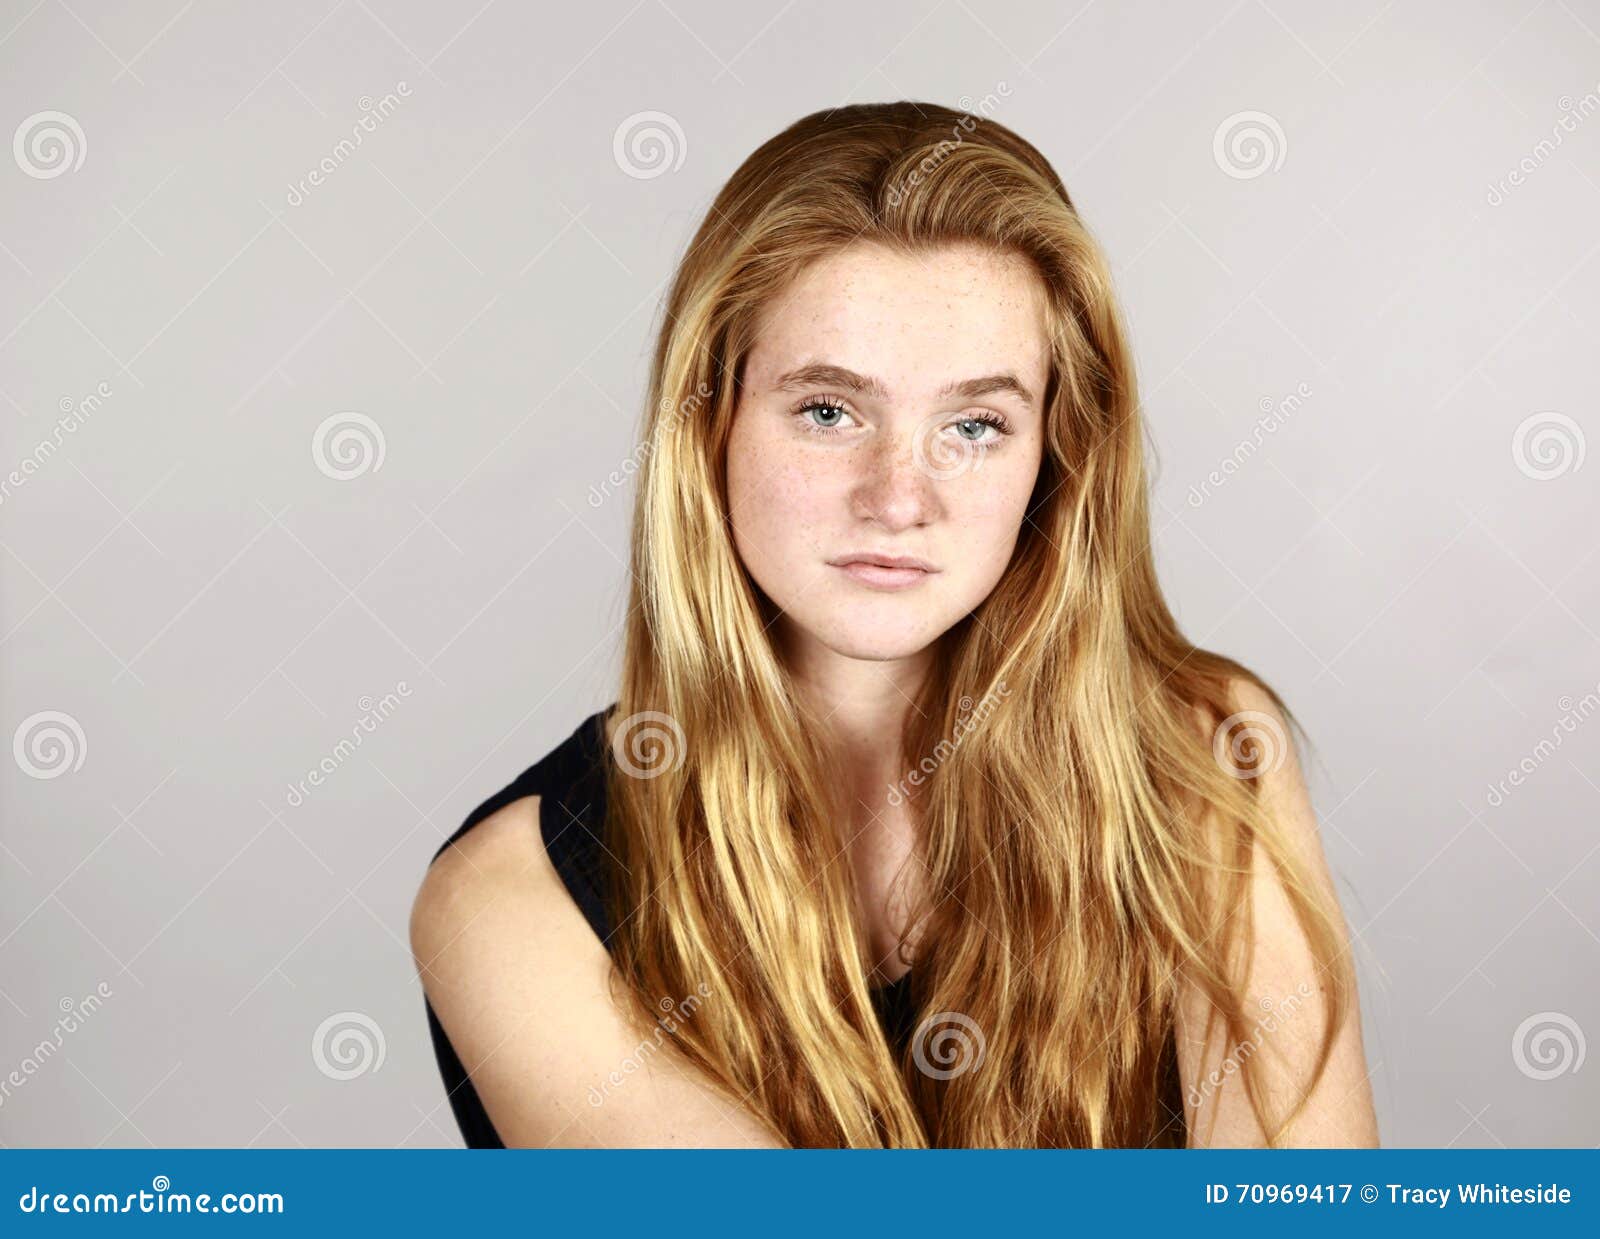 Girl with freckles stock image. Image of stylish, average - 70969417